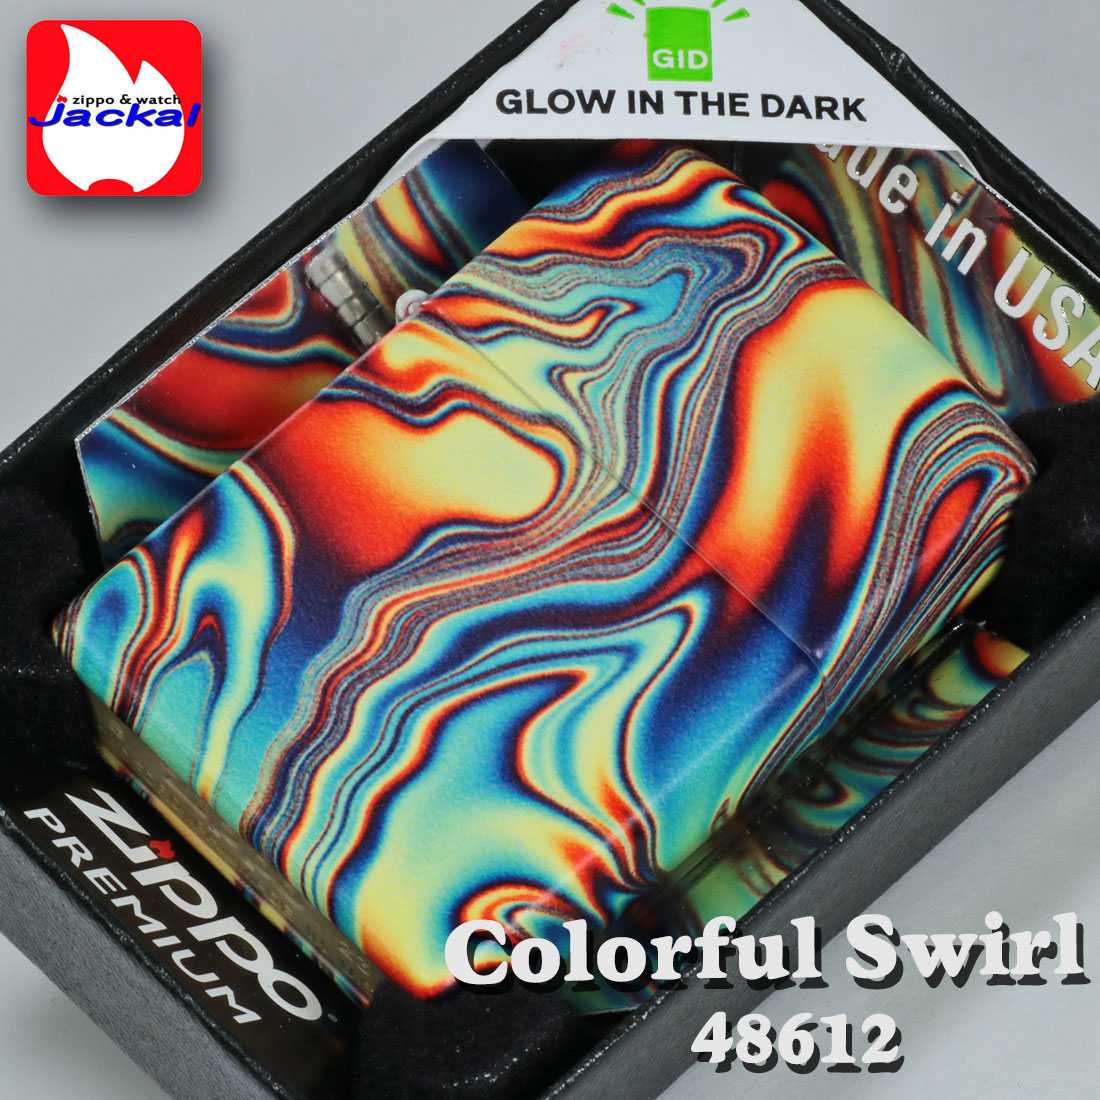 zippo(ジッポーライター)Coloful Swirl Pattem カラフルな渦巻 暗闇で光る GLOW IN THE DARK　2023モデル  #48612 オイルライター 送料無料 （ネコポス対応）